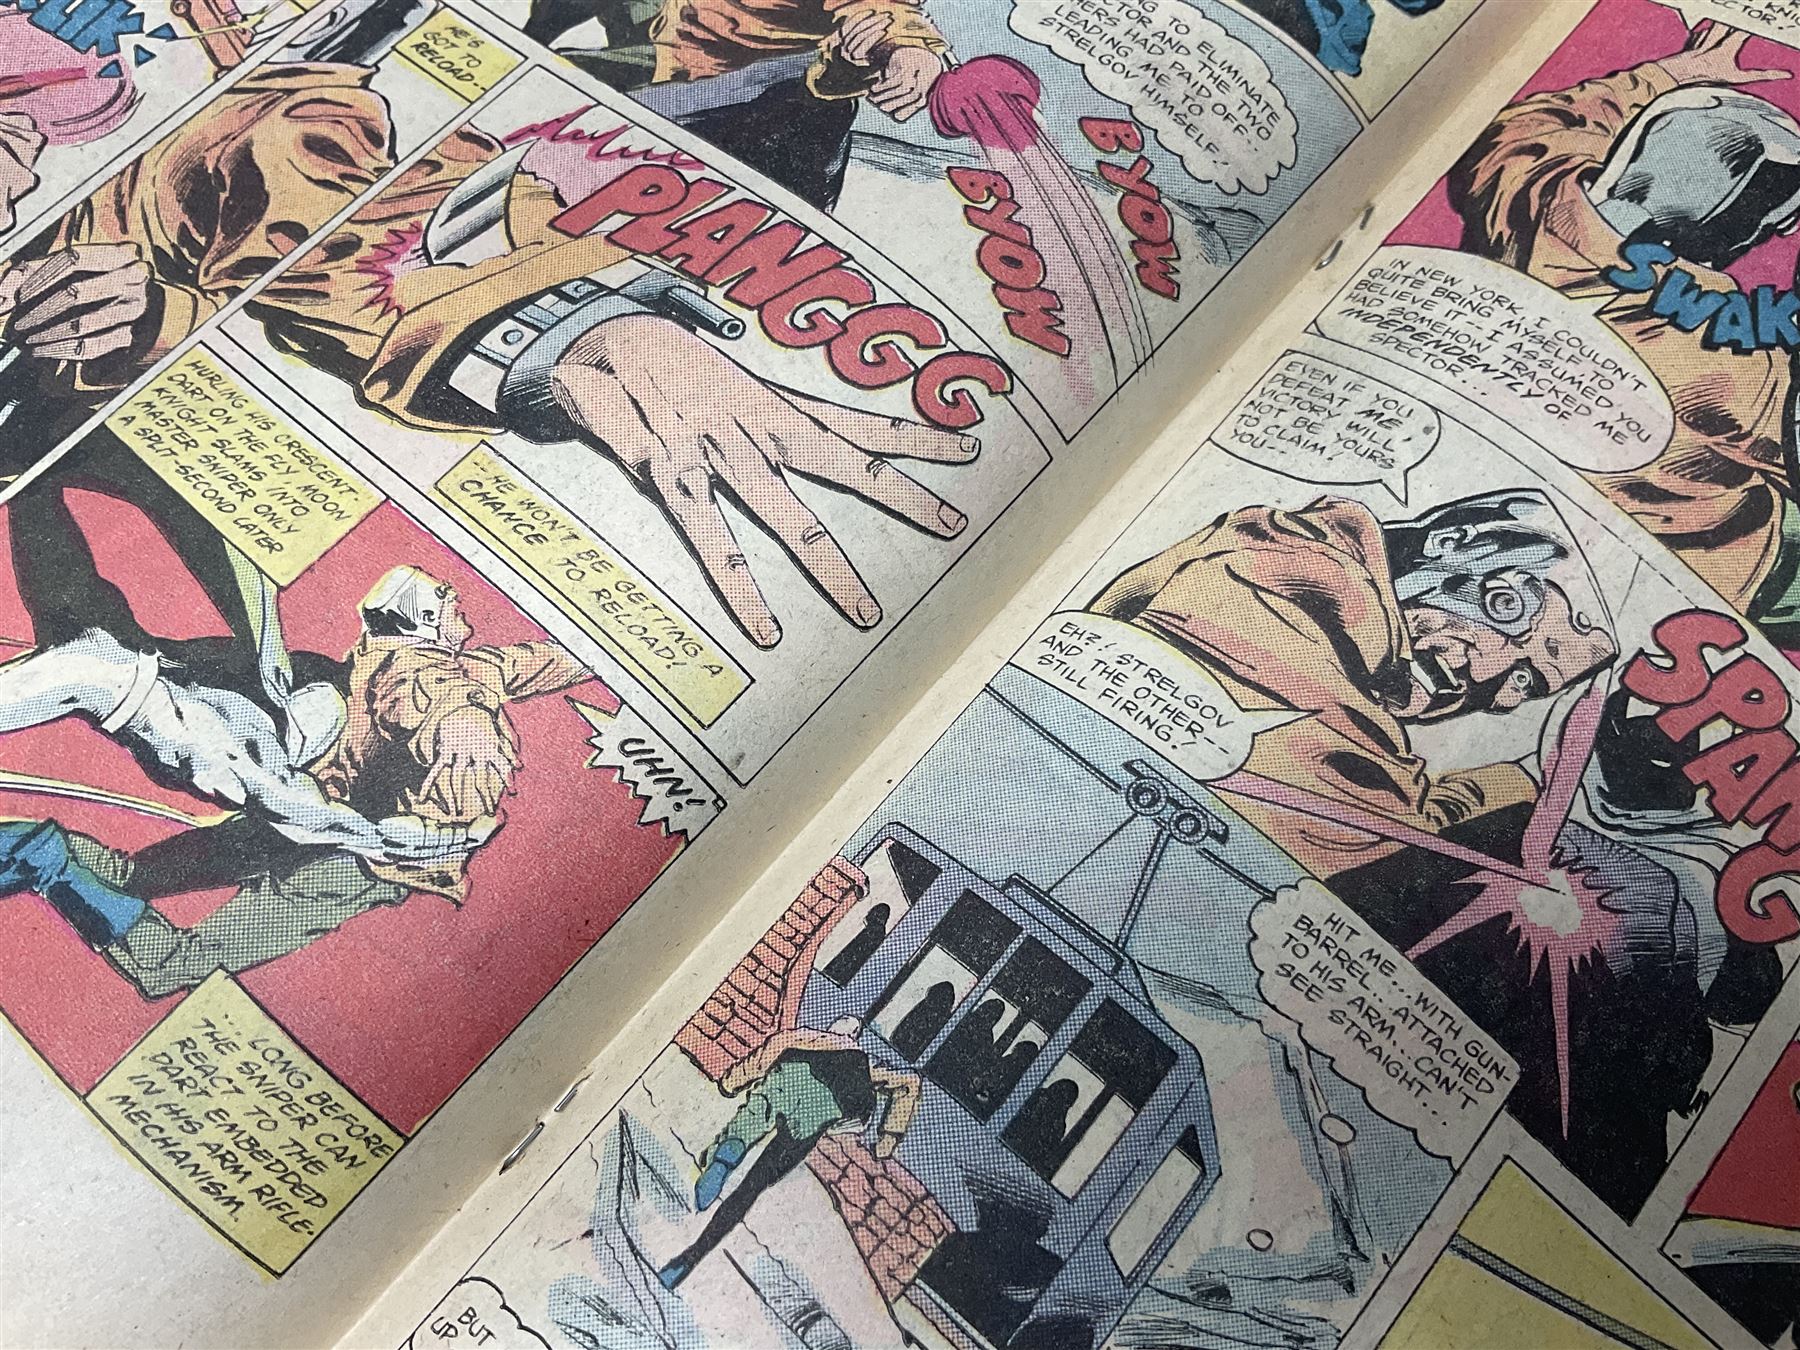 Moon Knight (1981-1982) Marvel comics. No. 13 - Image 5 of 11